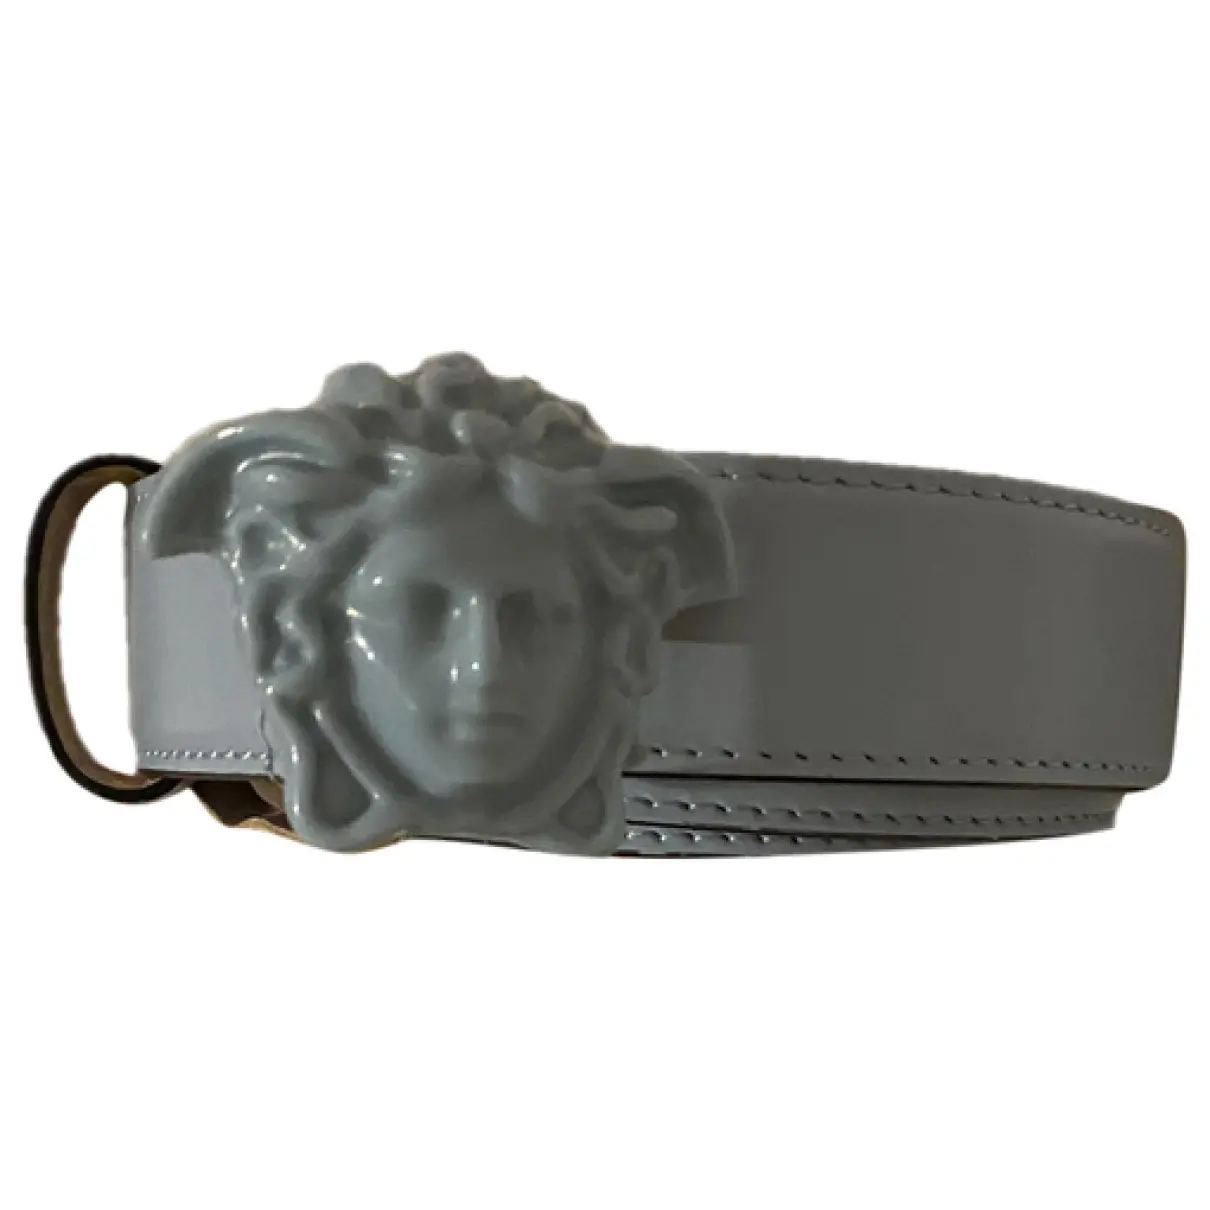 Medusa leather belt Versace